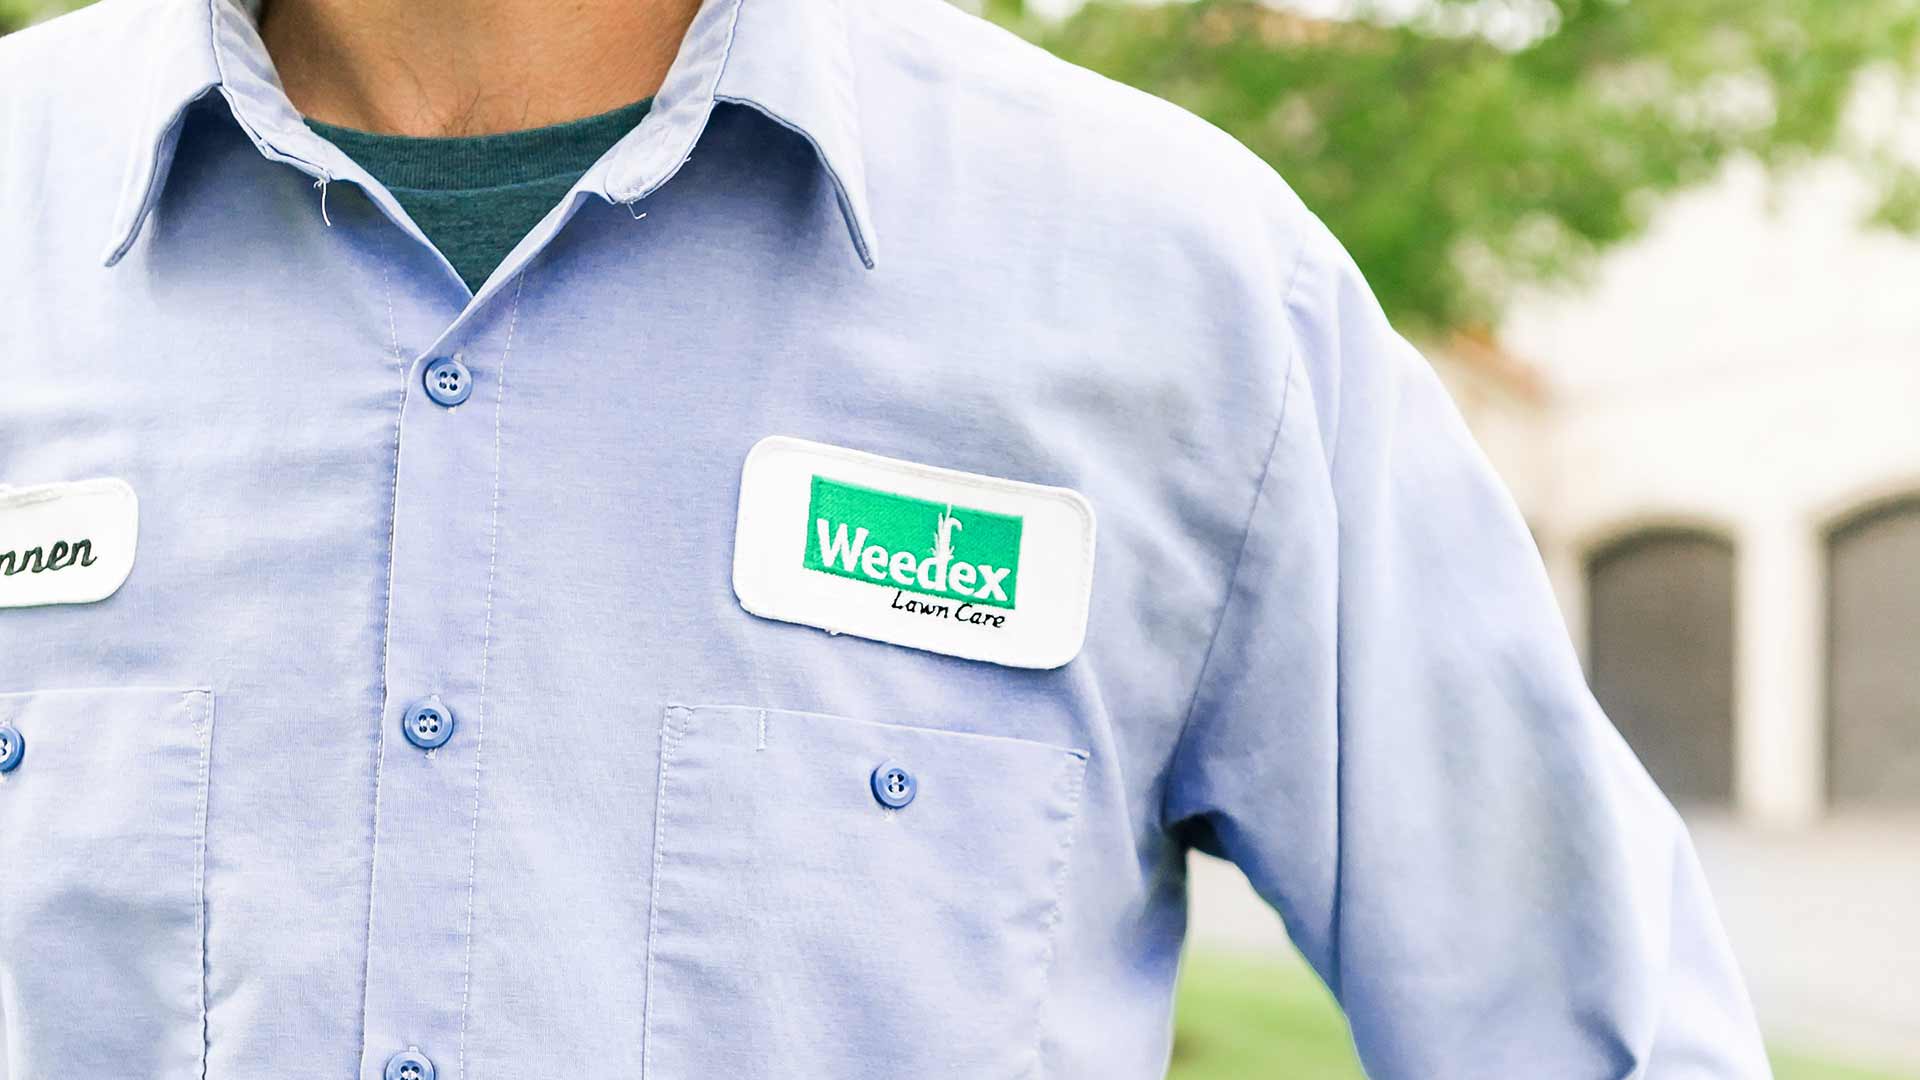 Weedex Lawn Care employee wearing a uniform with logo near Plano, Texas.